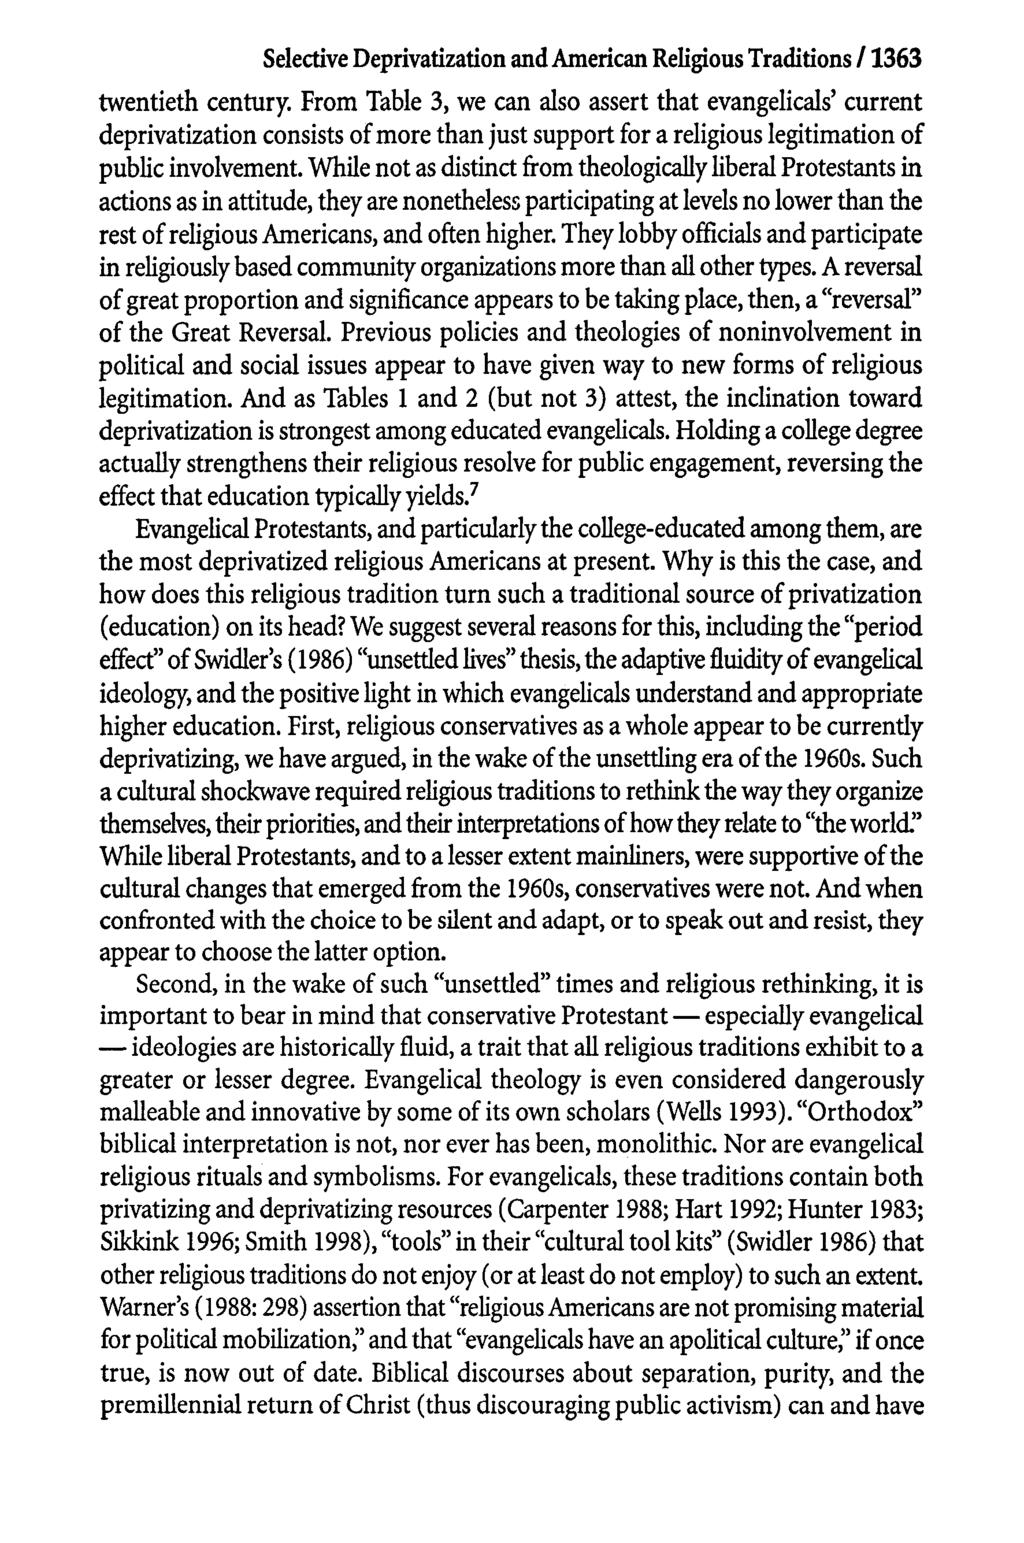 Selective Deprivatization and American Religious Traditions / 1363 twentieth century.